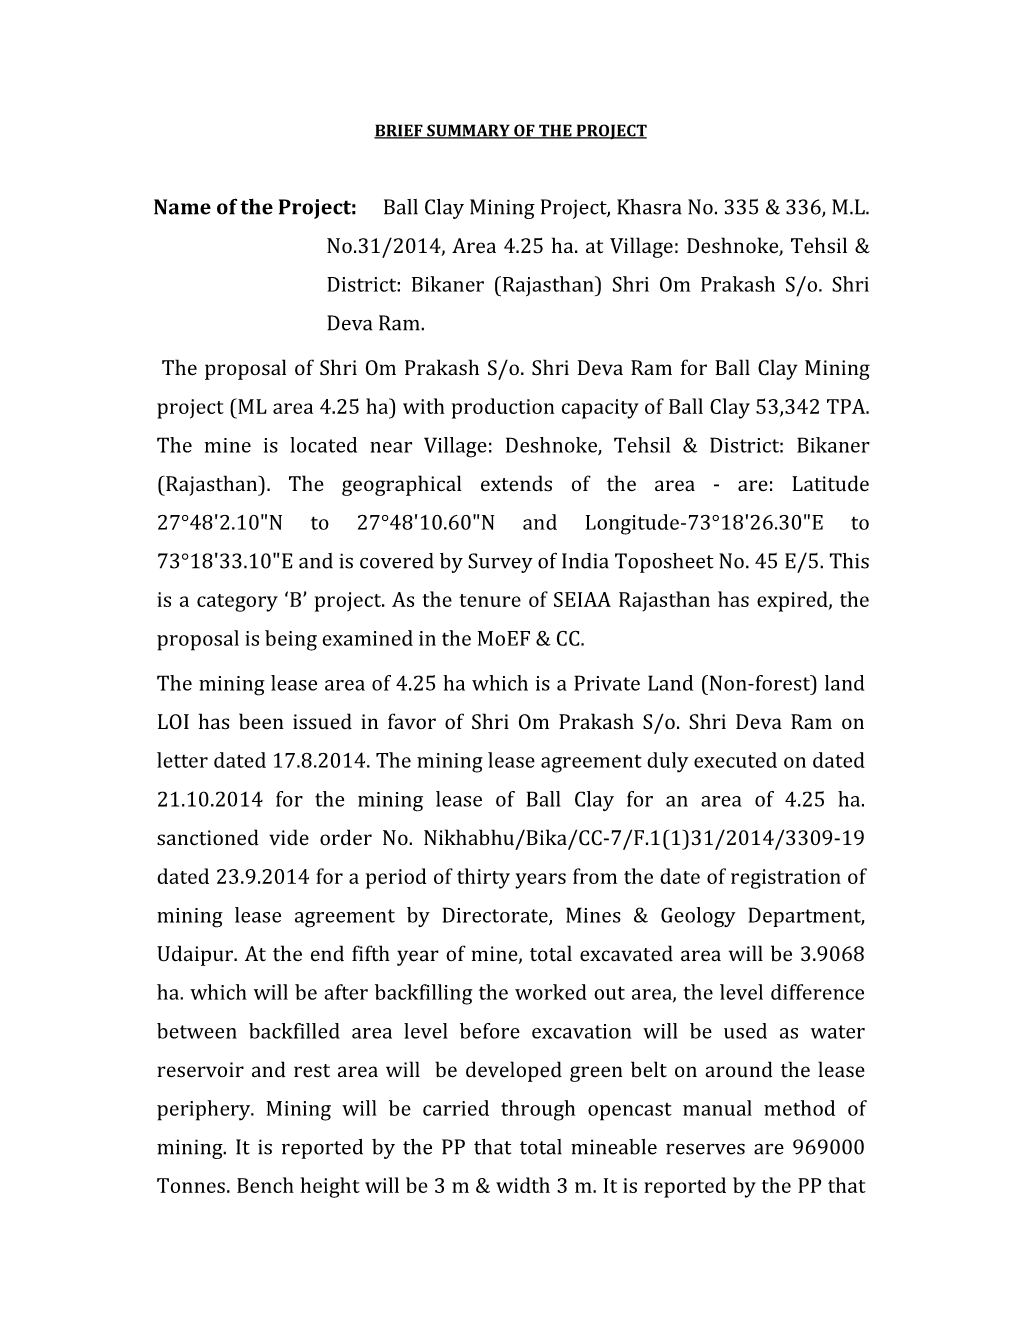 Name of the Project: Ball Clay Mining Project, Khasra No. 335 & 336, M.L. No.31/2014, Area 4.25 Ha. at Village: Deshnoke, T